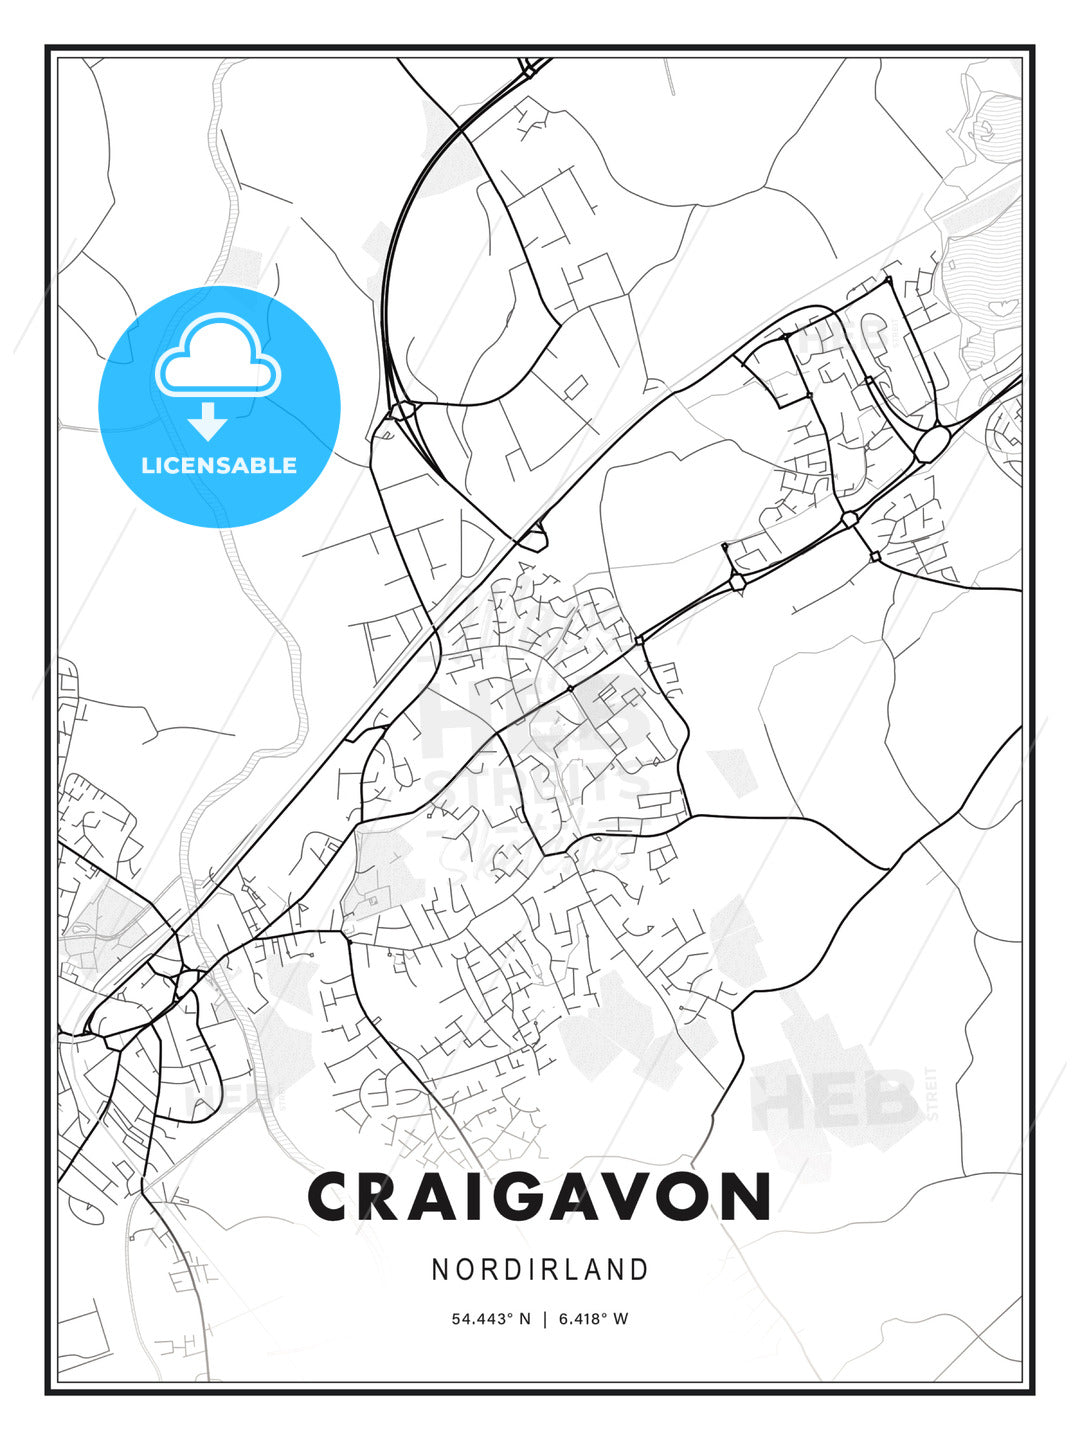 Craigavon, Nordirland, Modern Print Template in Various Formats - HEBSTREITS Sketches